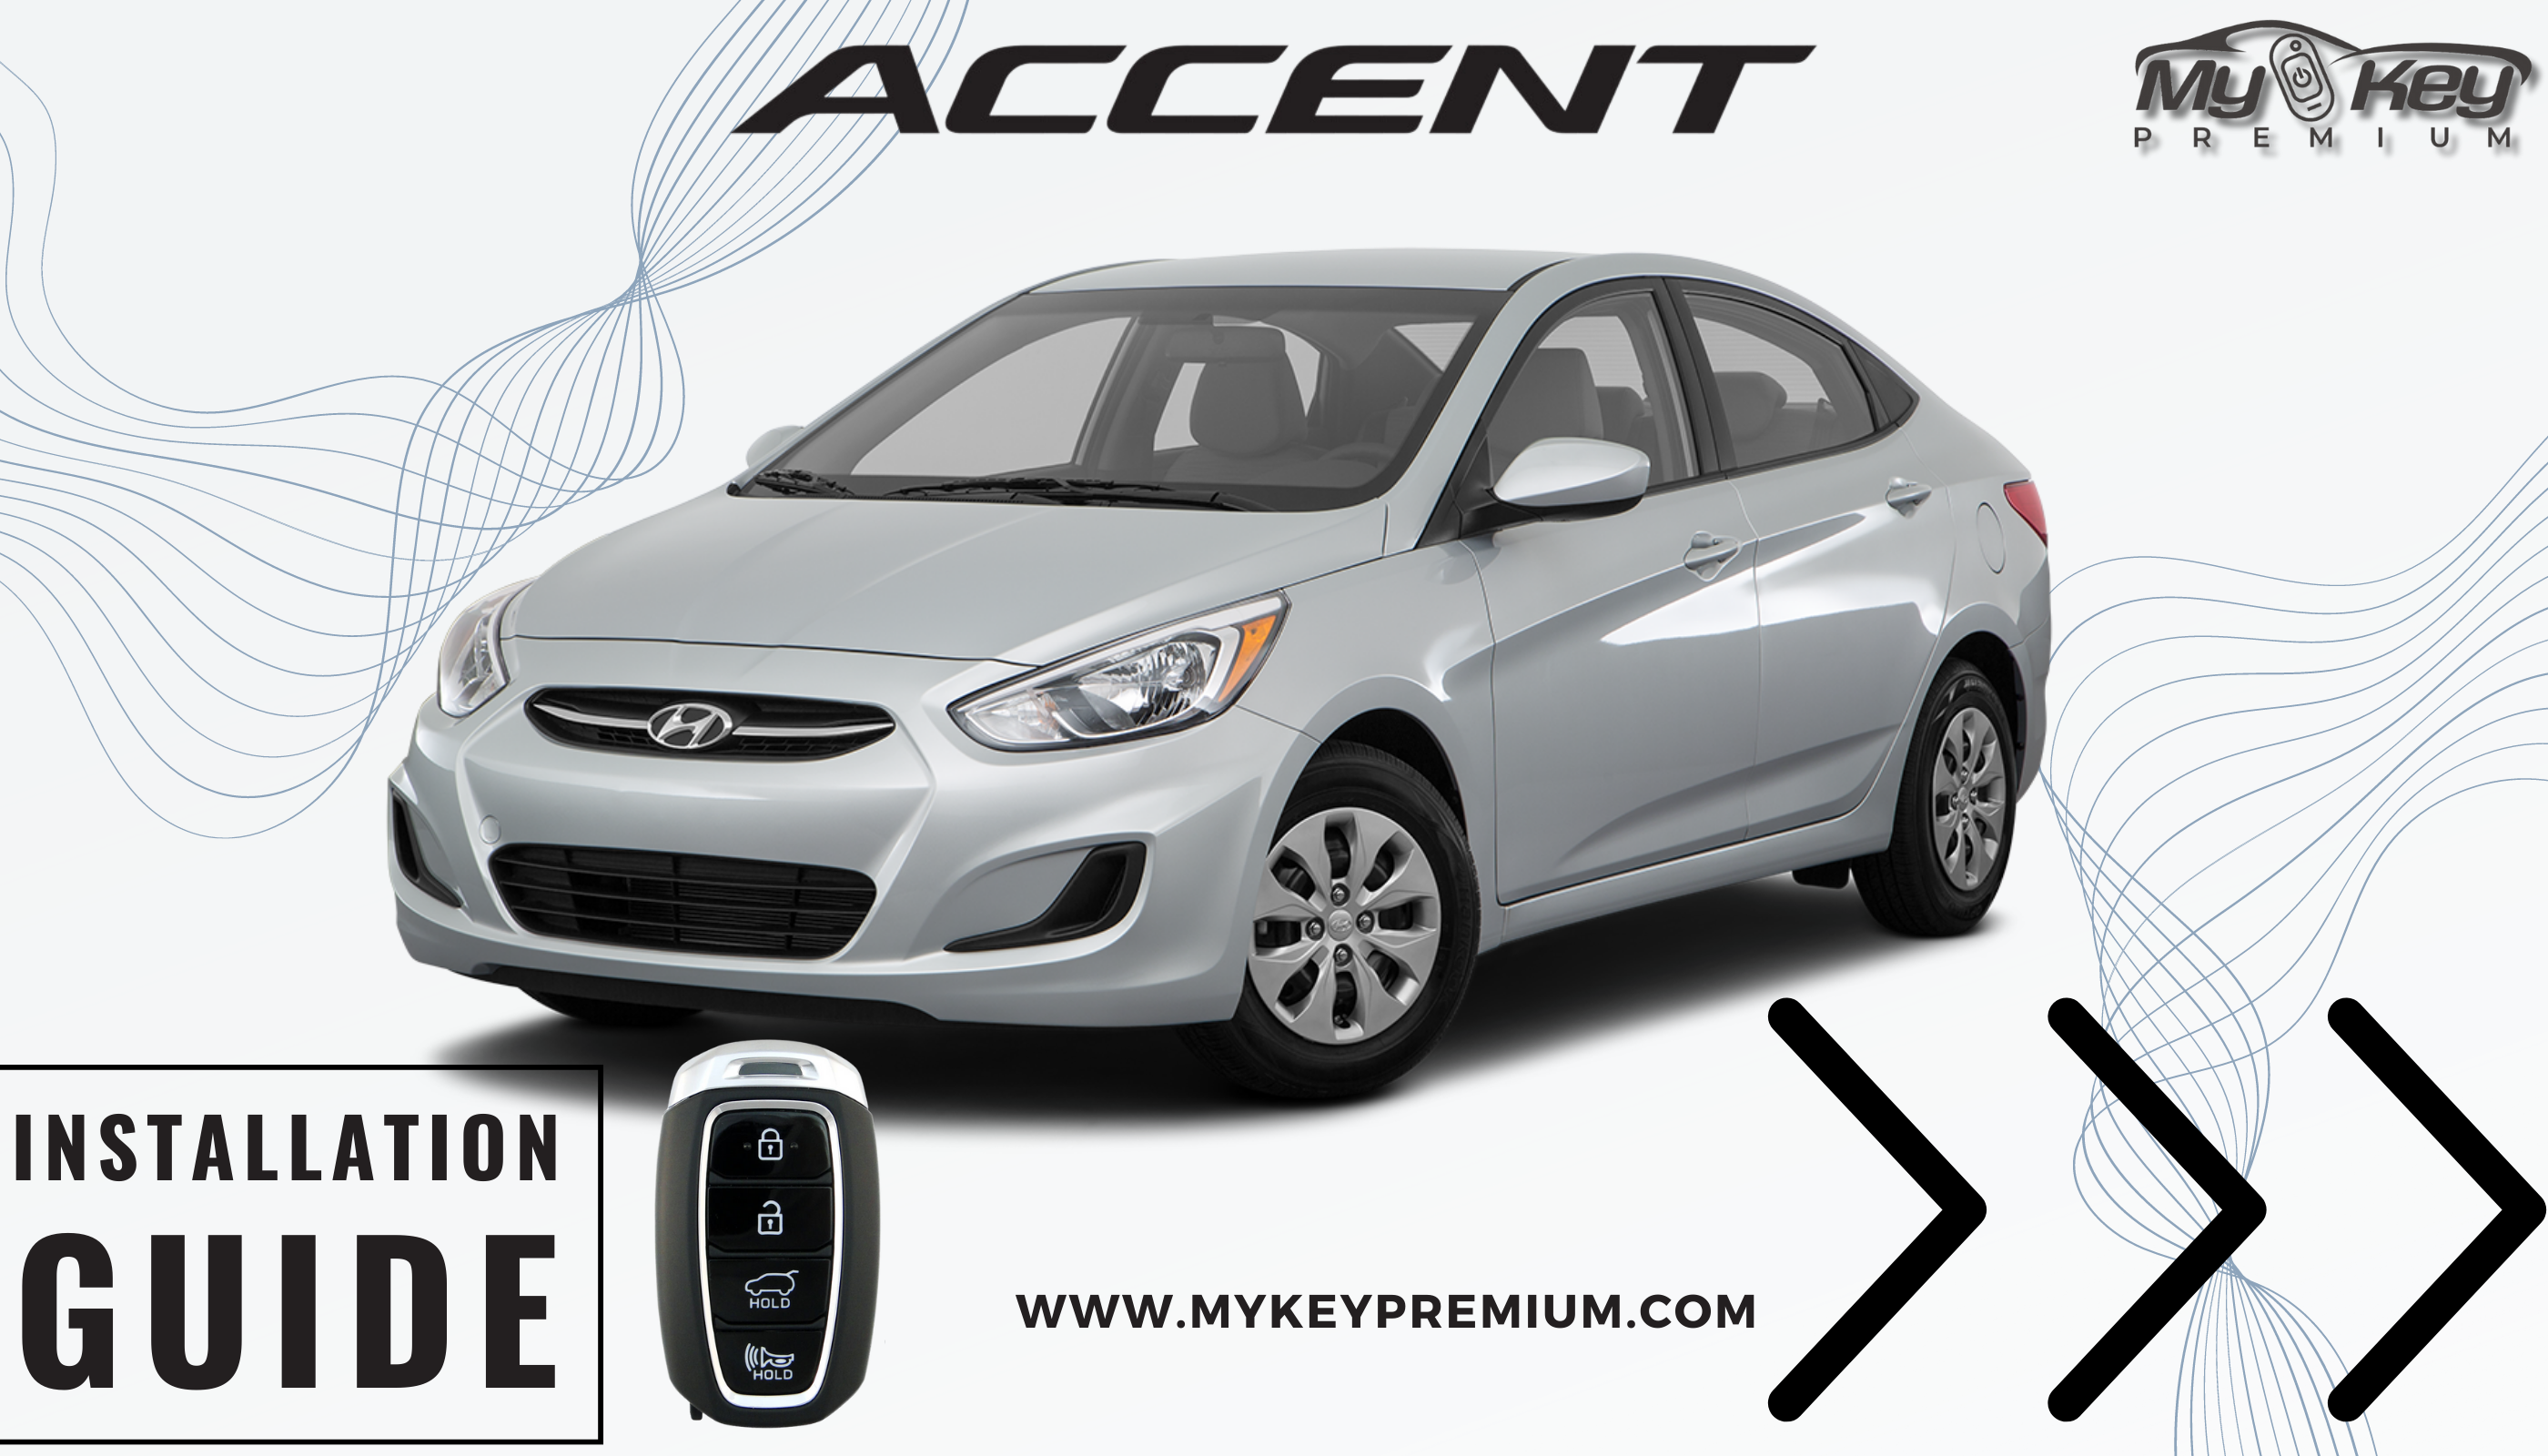 Hyundai Accent Key Fob remote engine starter kit installation guide [My Key Premium]